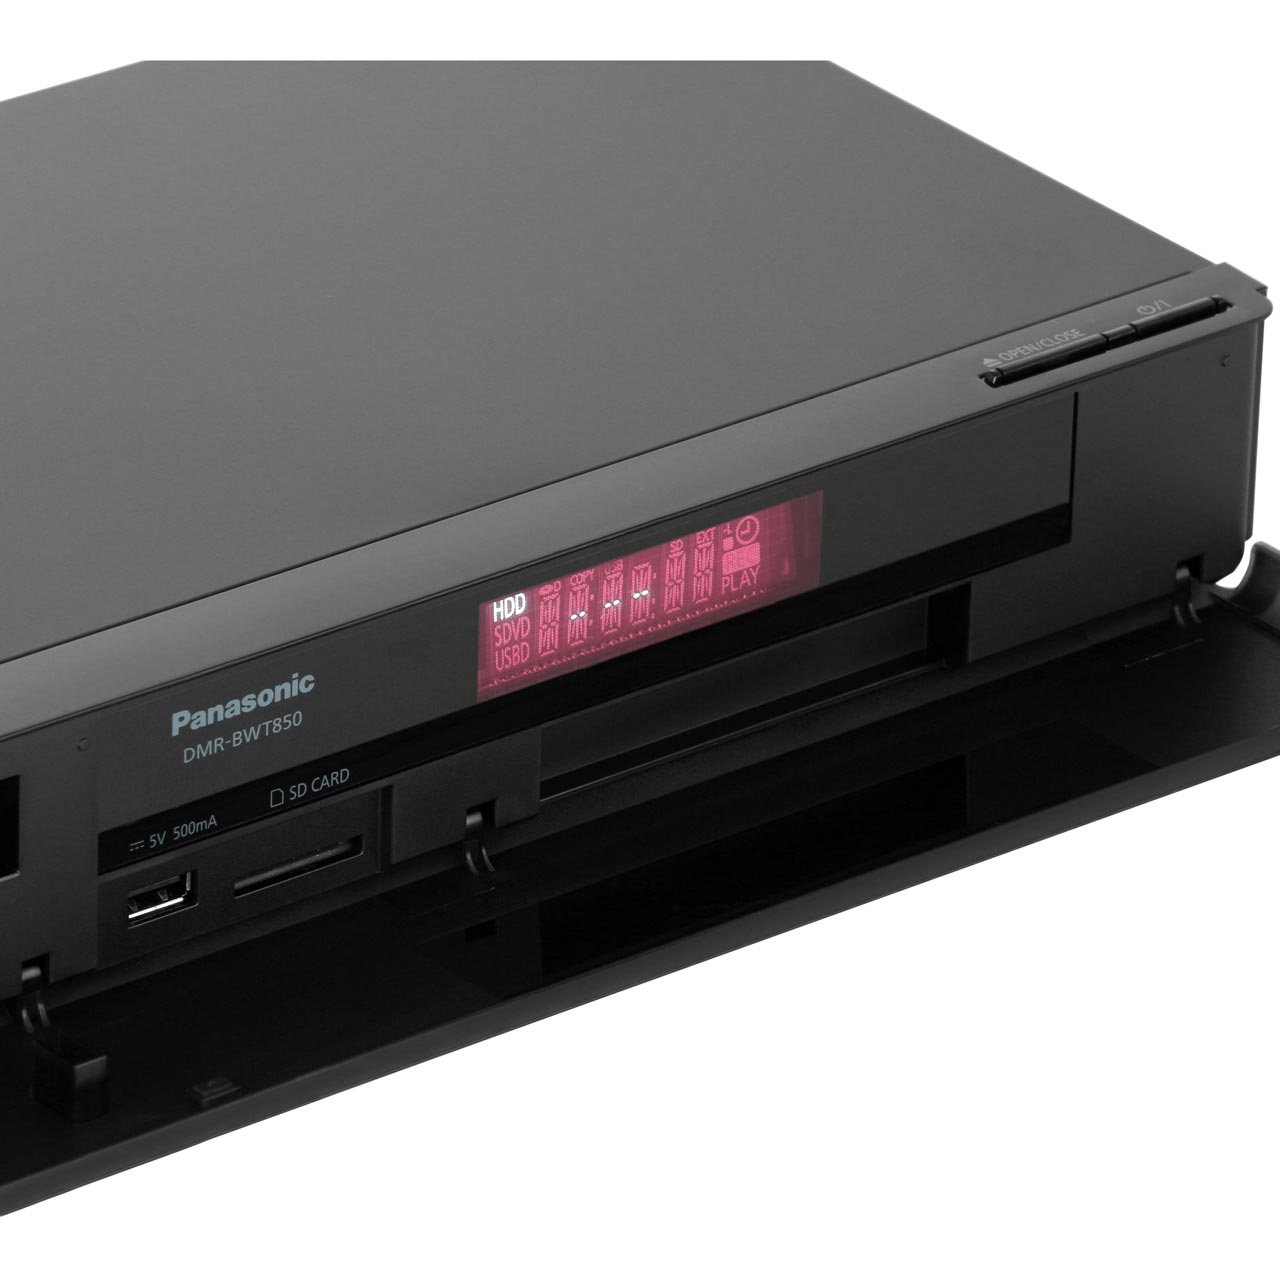 Panasonic DMR-BWT850EB Blu-Ray Player 1080p Upscaling with Freeview HD - Black | eBay